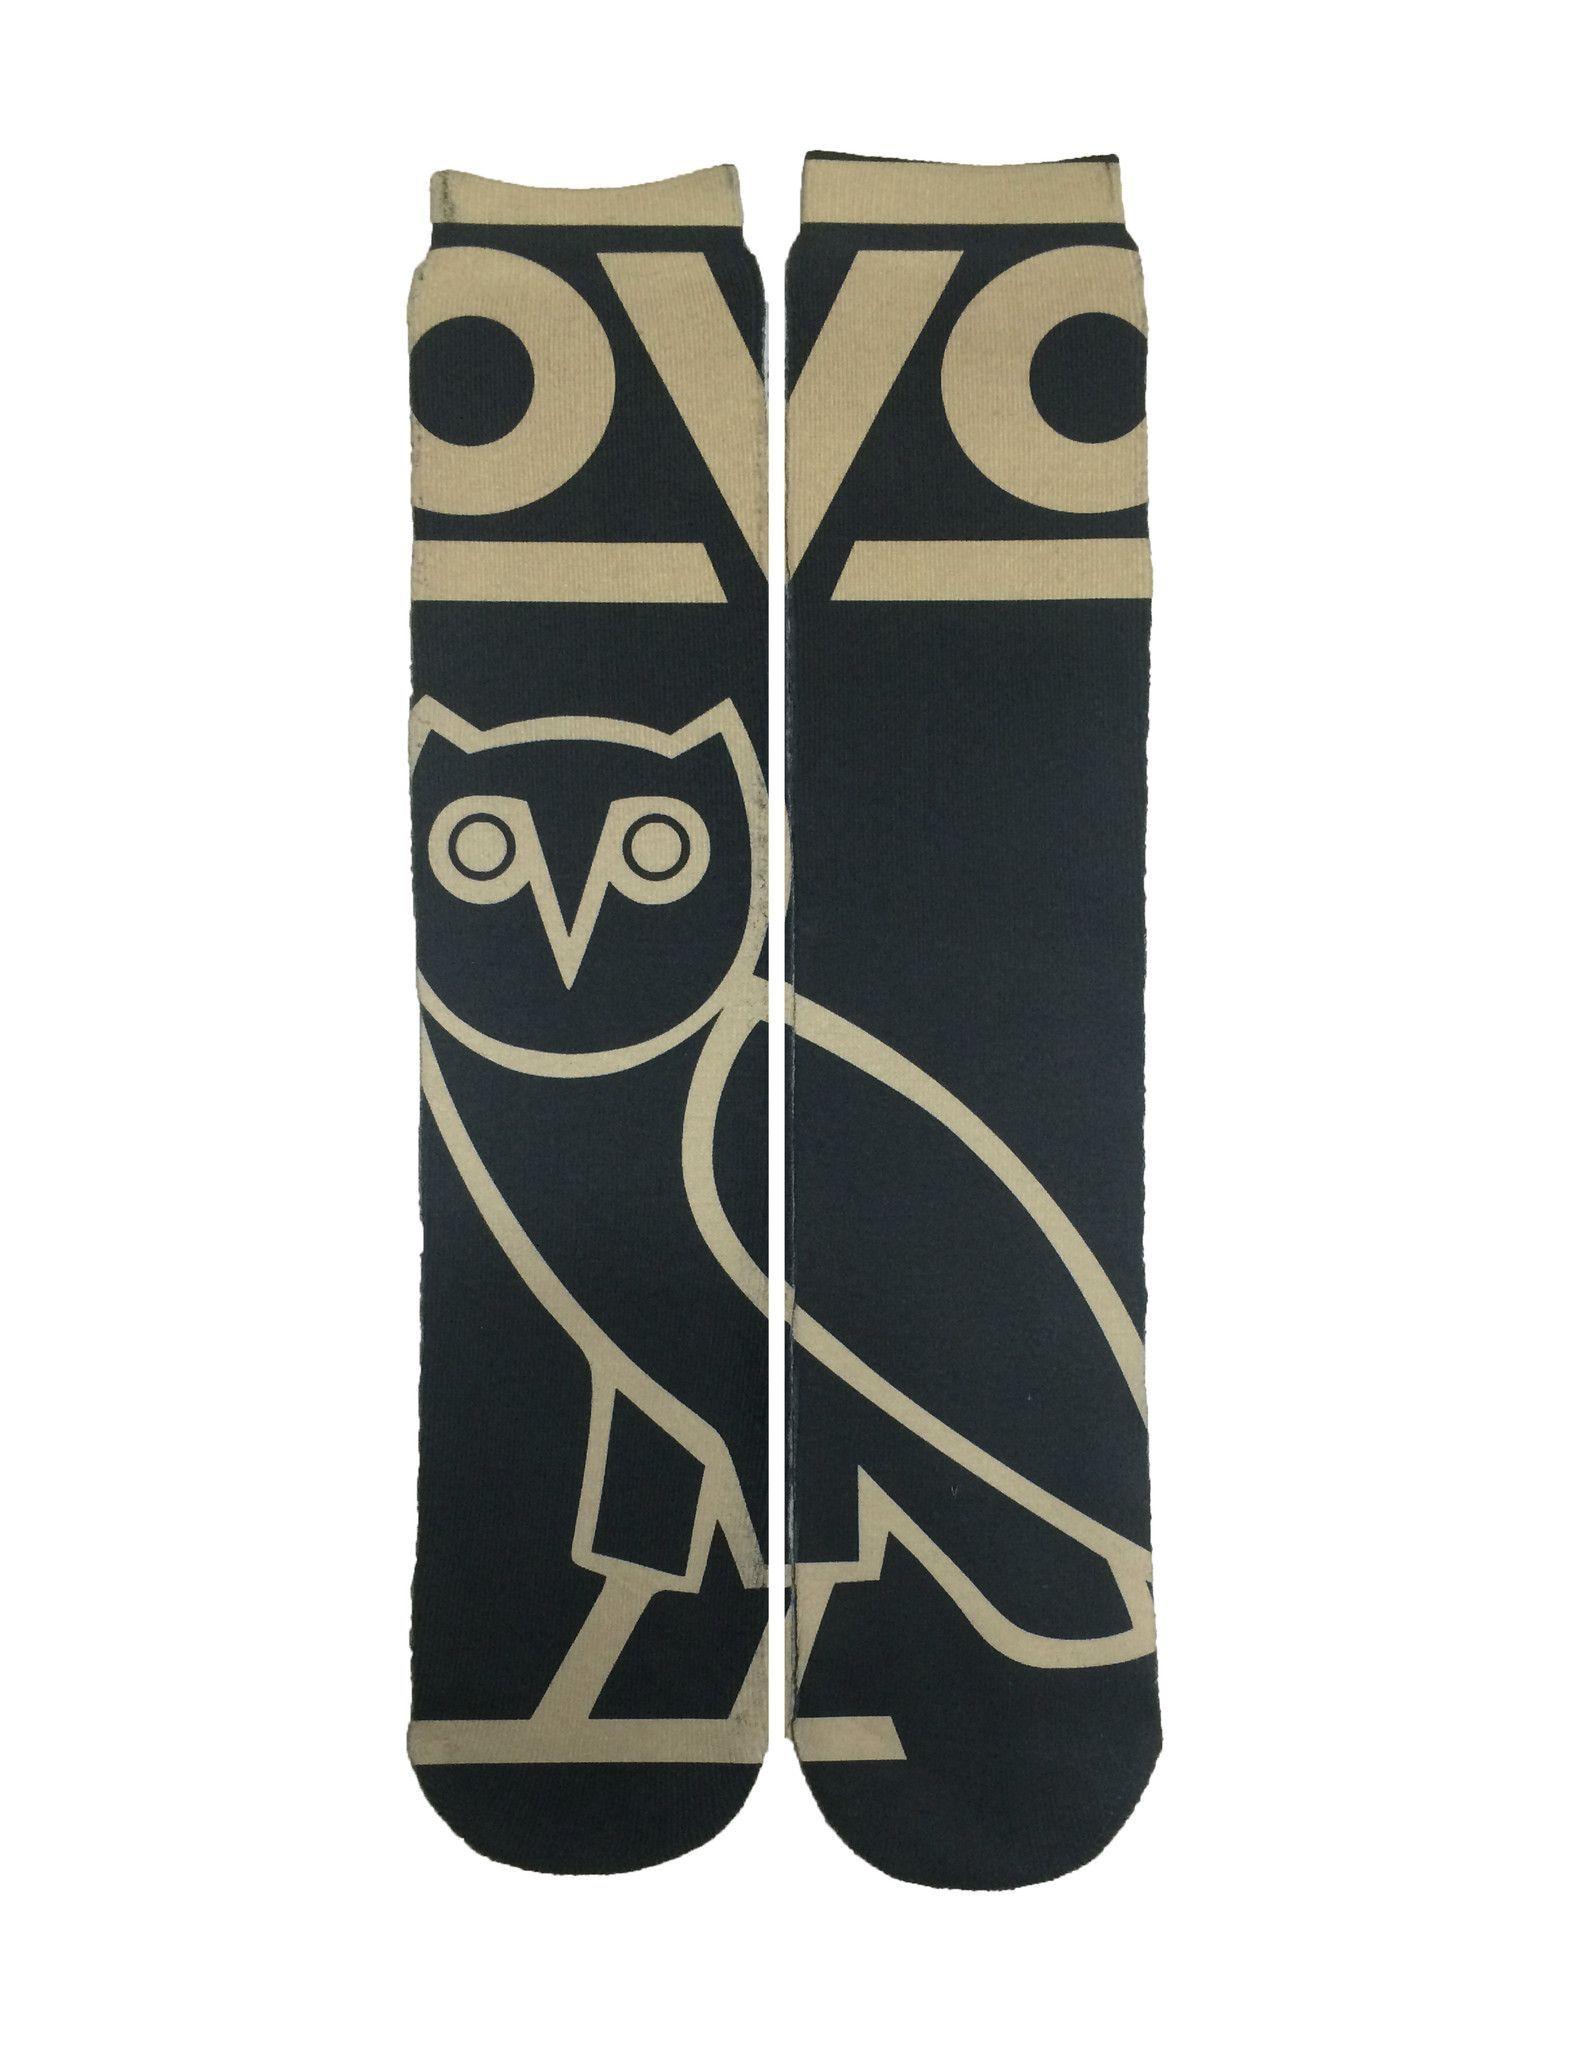 Ovo Owl Logo - Drake OVO Classic Owl Logo Socks | Fashion | Socks, Mens fashion ...